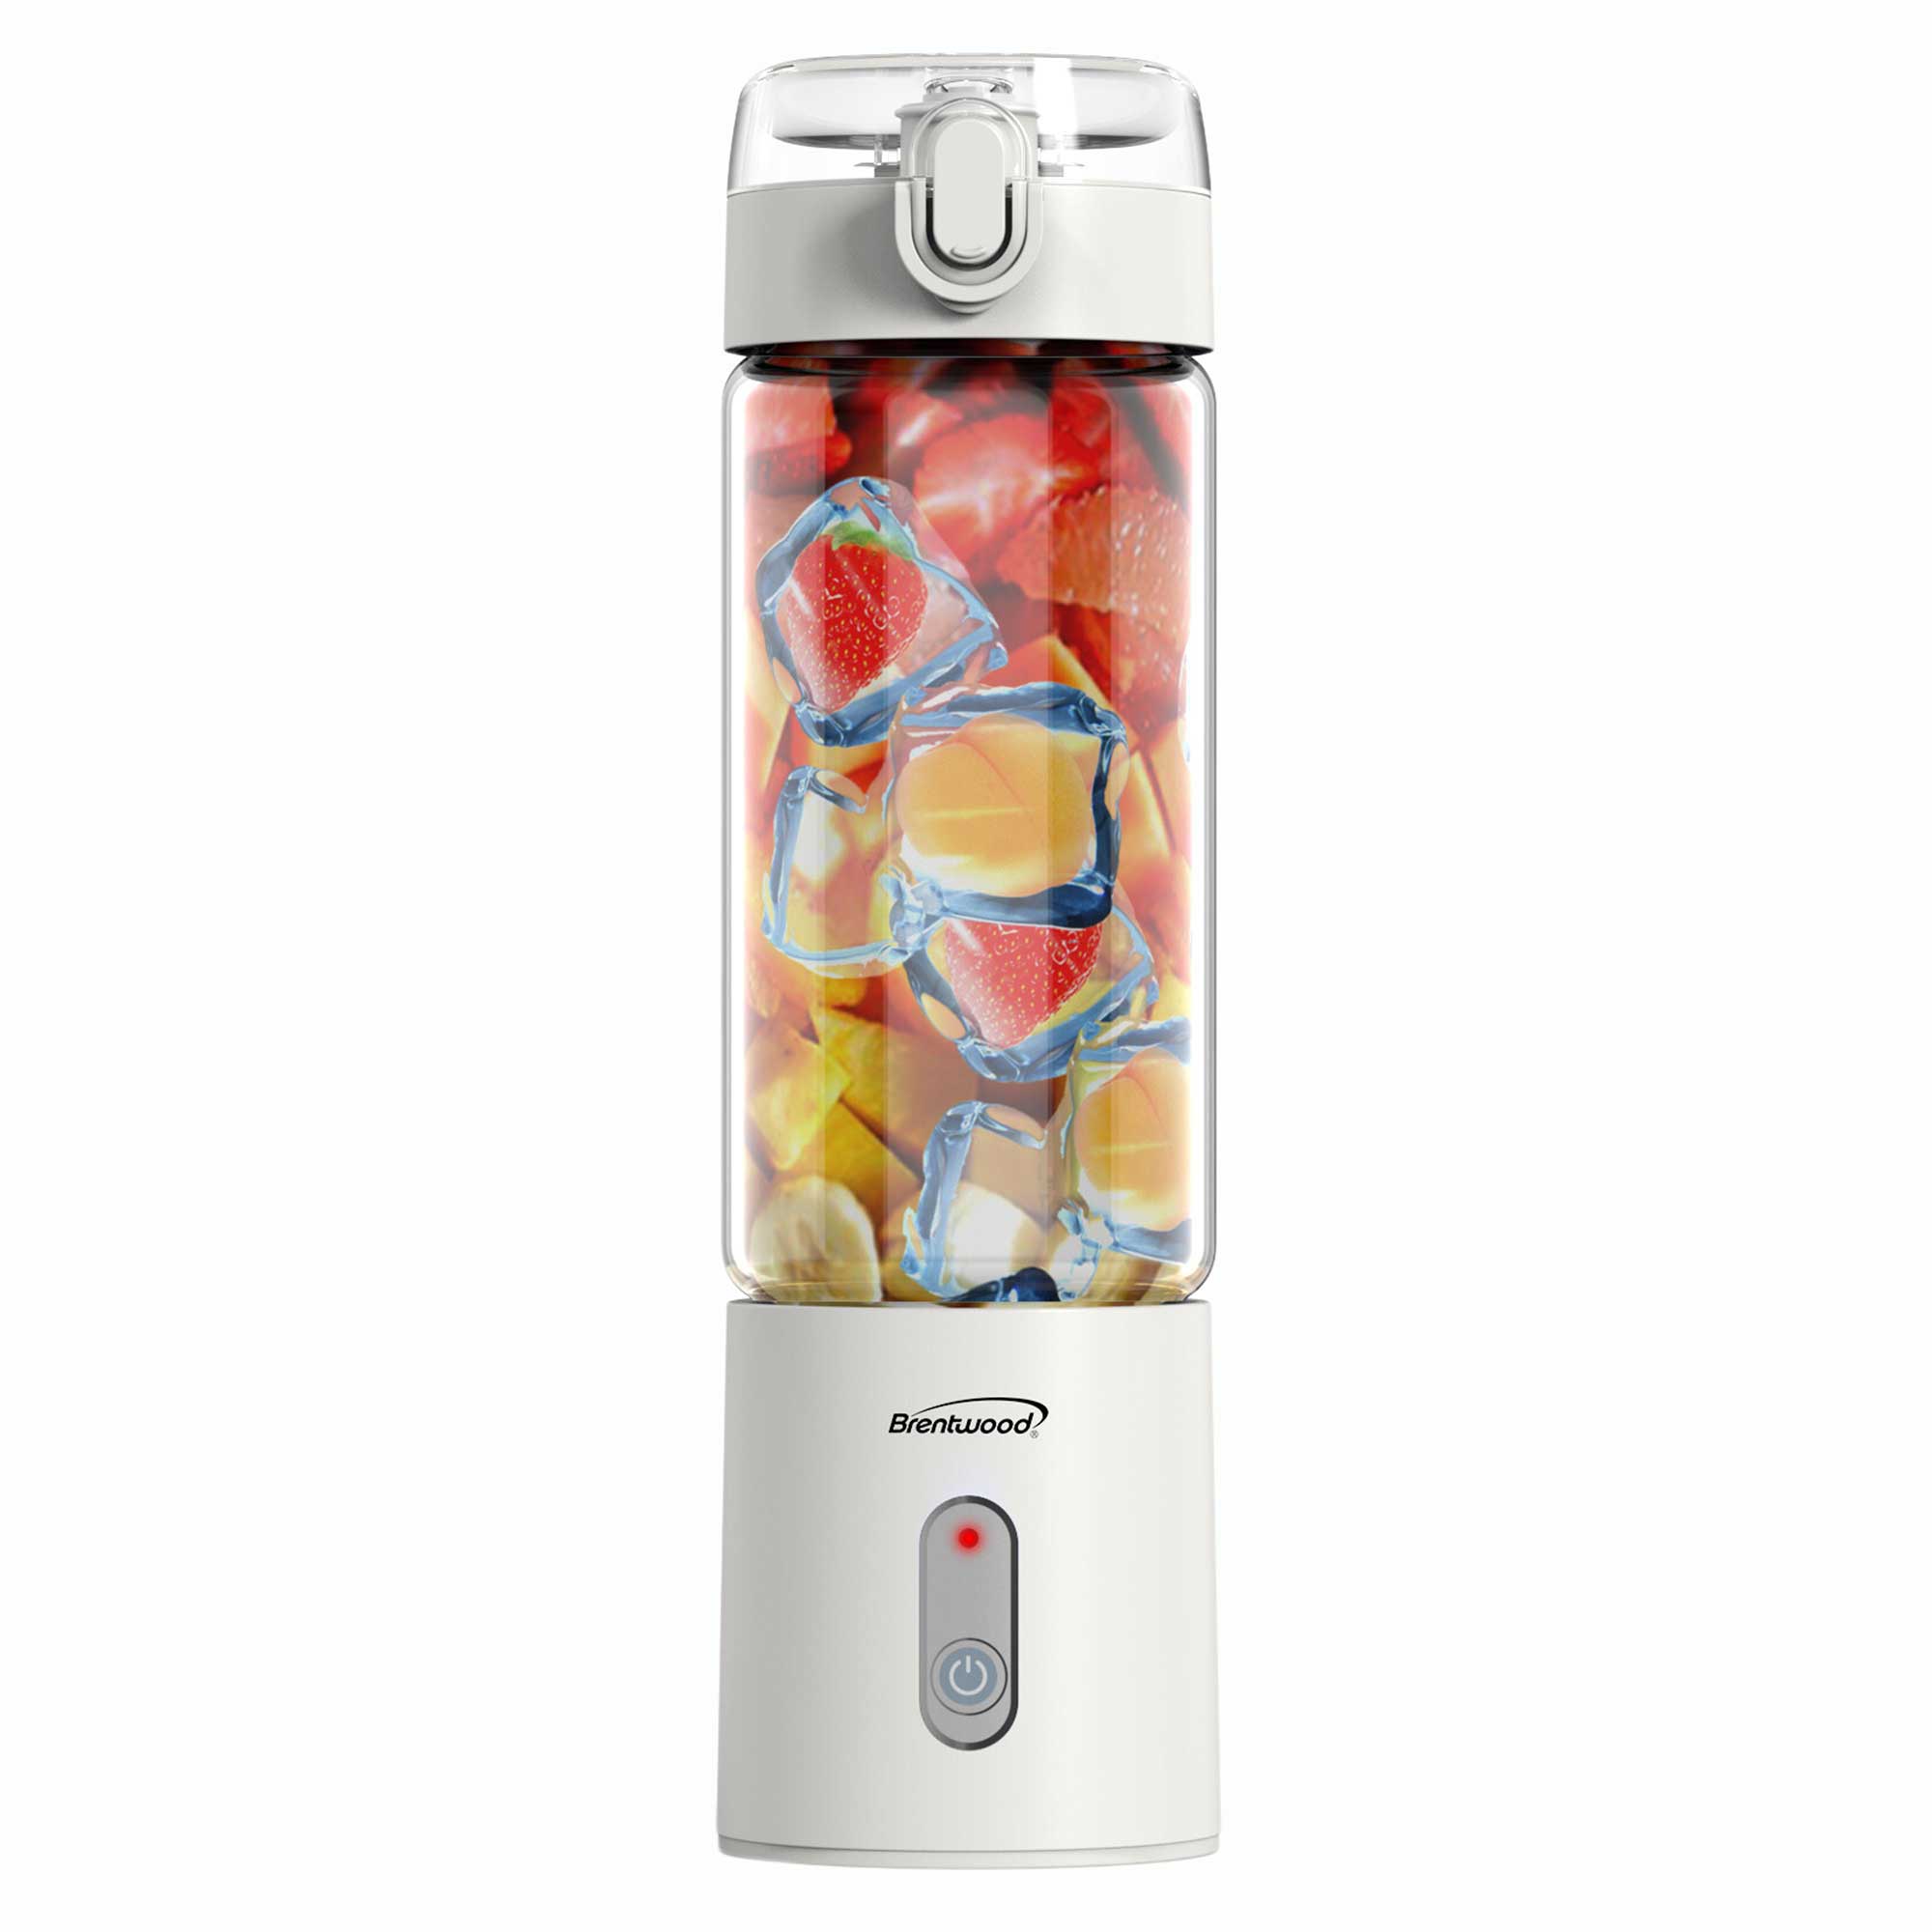  Portable Blender, Travel Juice Blender for Smoothies & Shakes,  17oz Fruit Mixer with Rechargeable Batteries, Bottle Blender for Kitchen,  Home, Gym (17oz, Blue): Home & Kitchen